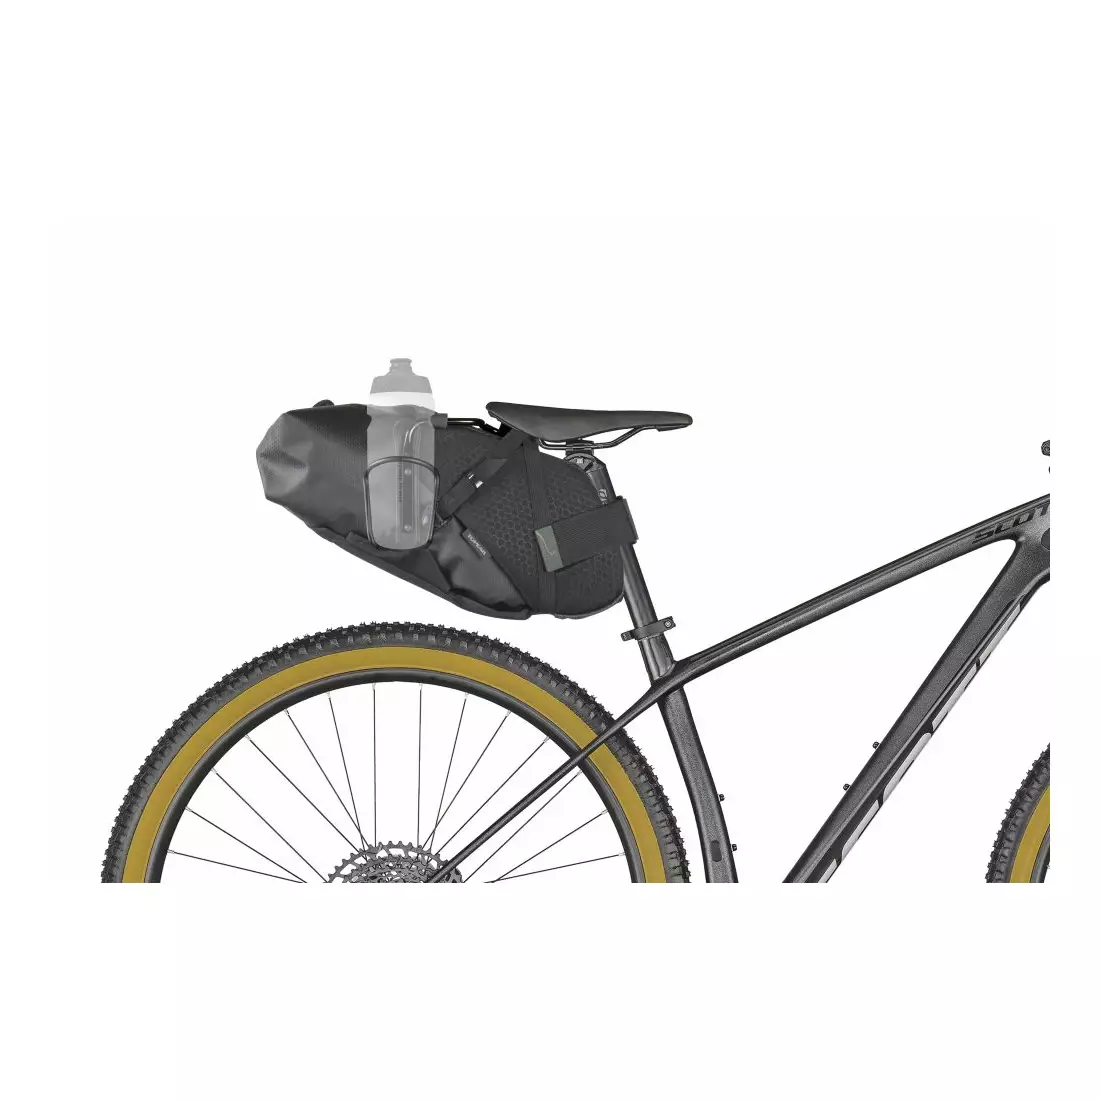 TOPEAK Loader Backloader Wishbone Stabilizator do tylnych toreb rowerowych bikepacking 